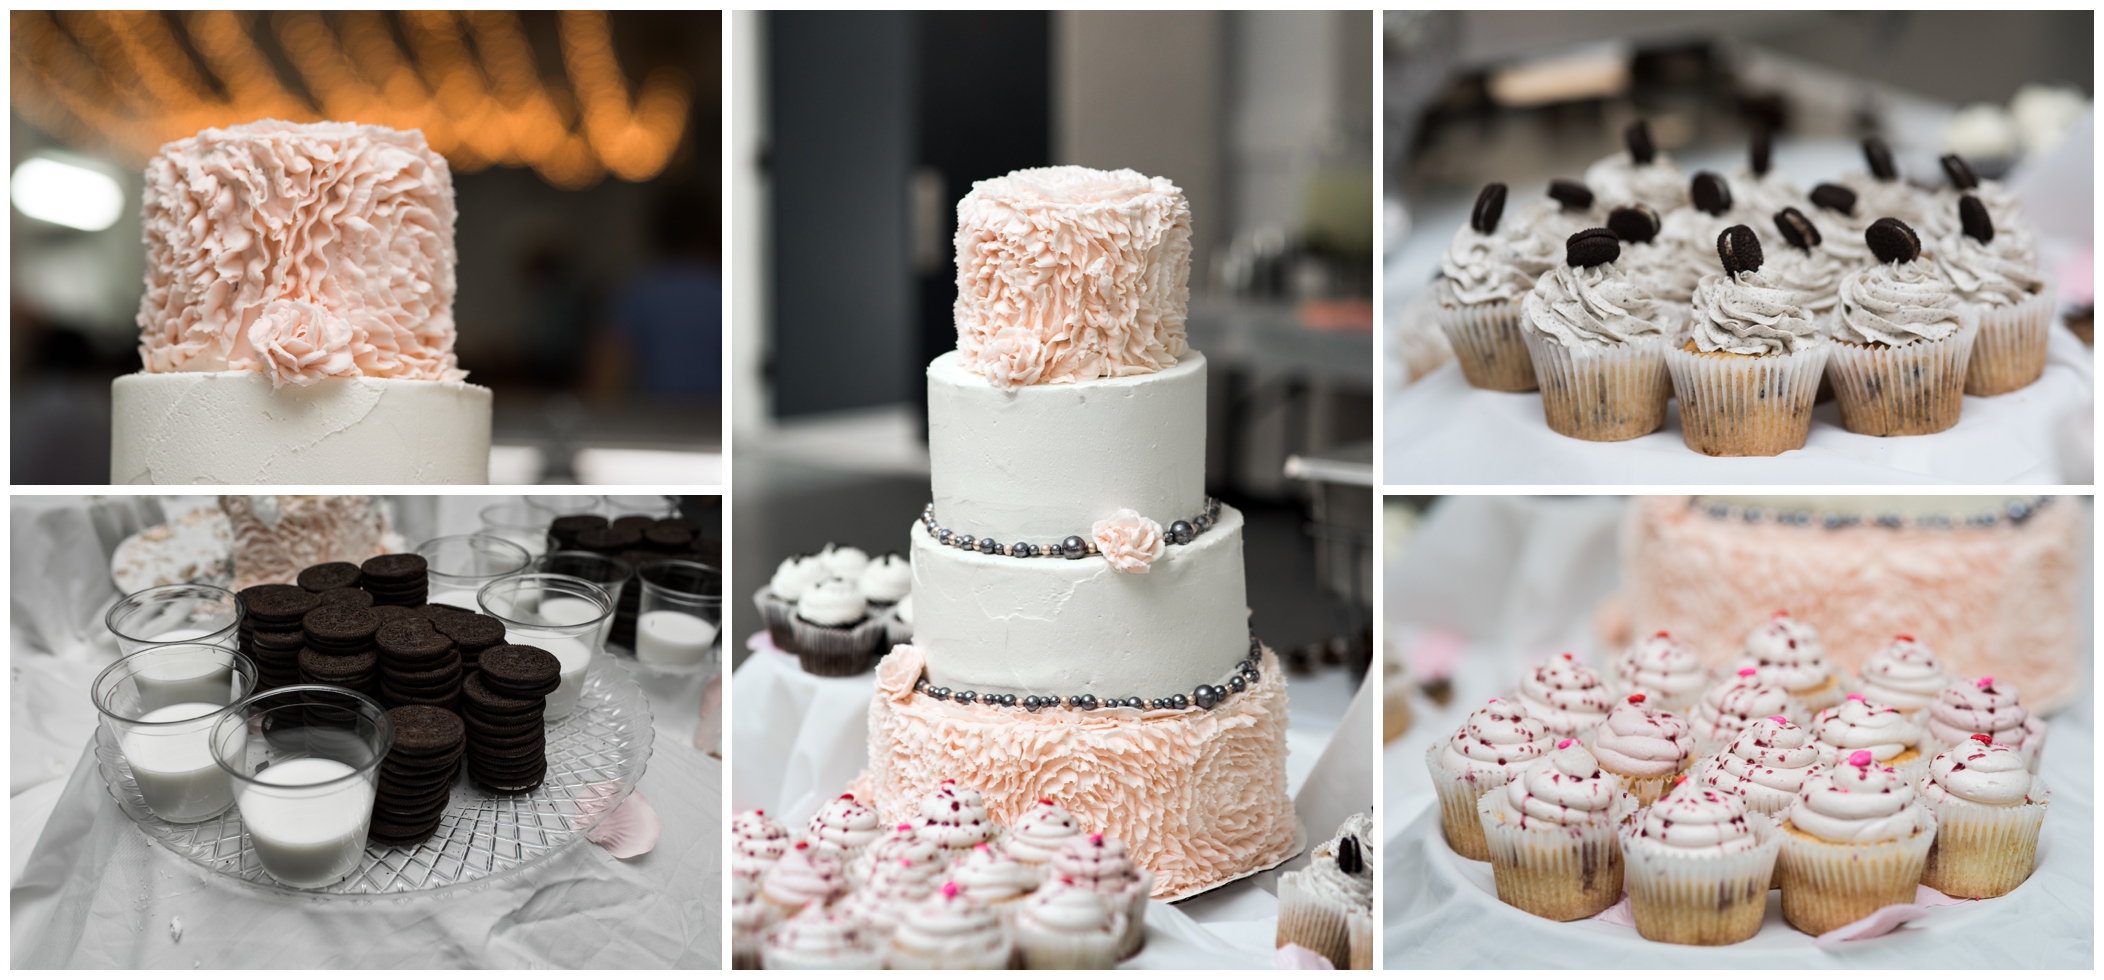 pink and white wedding cake